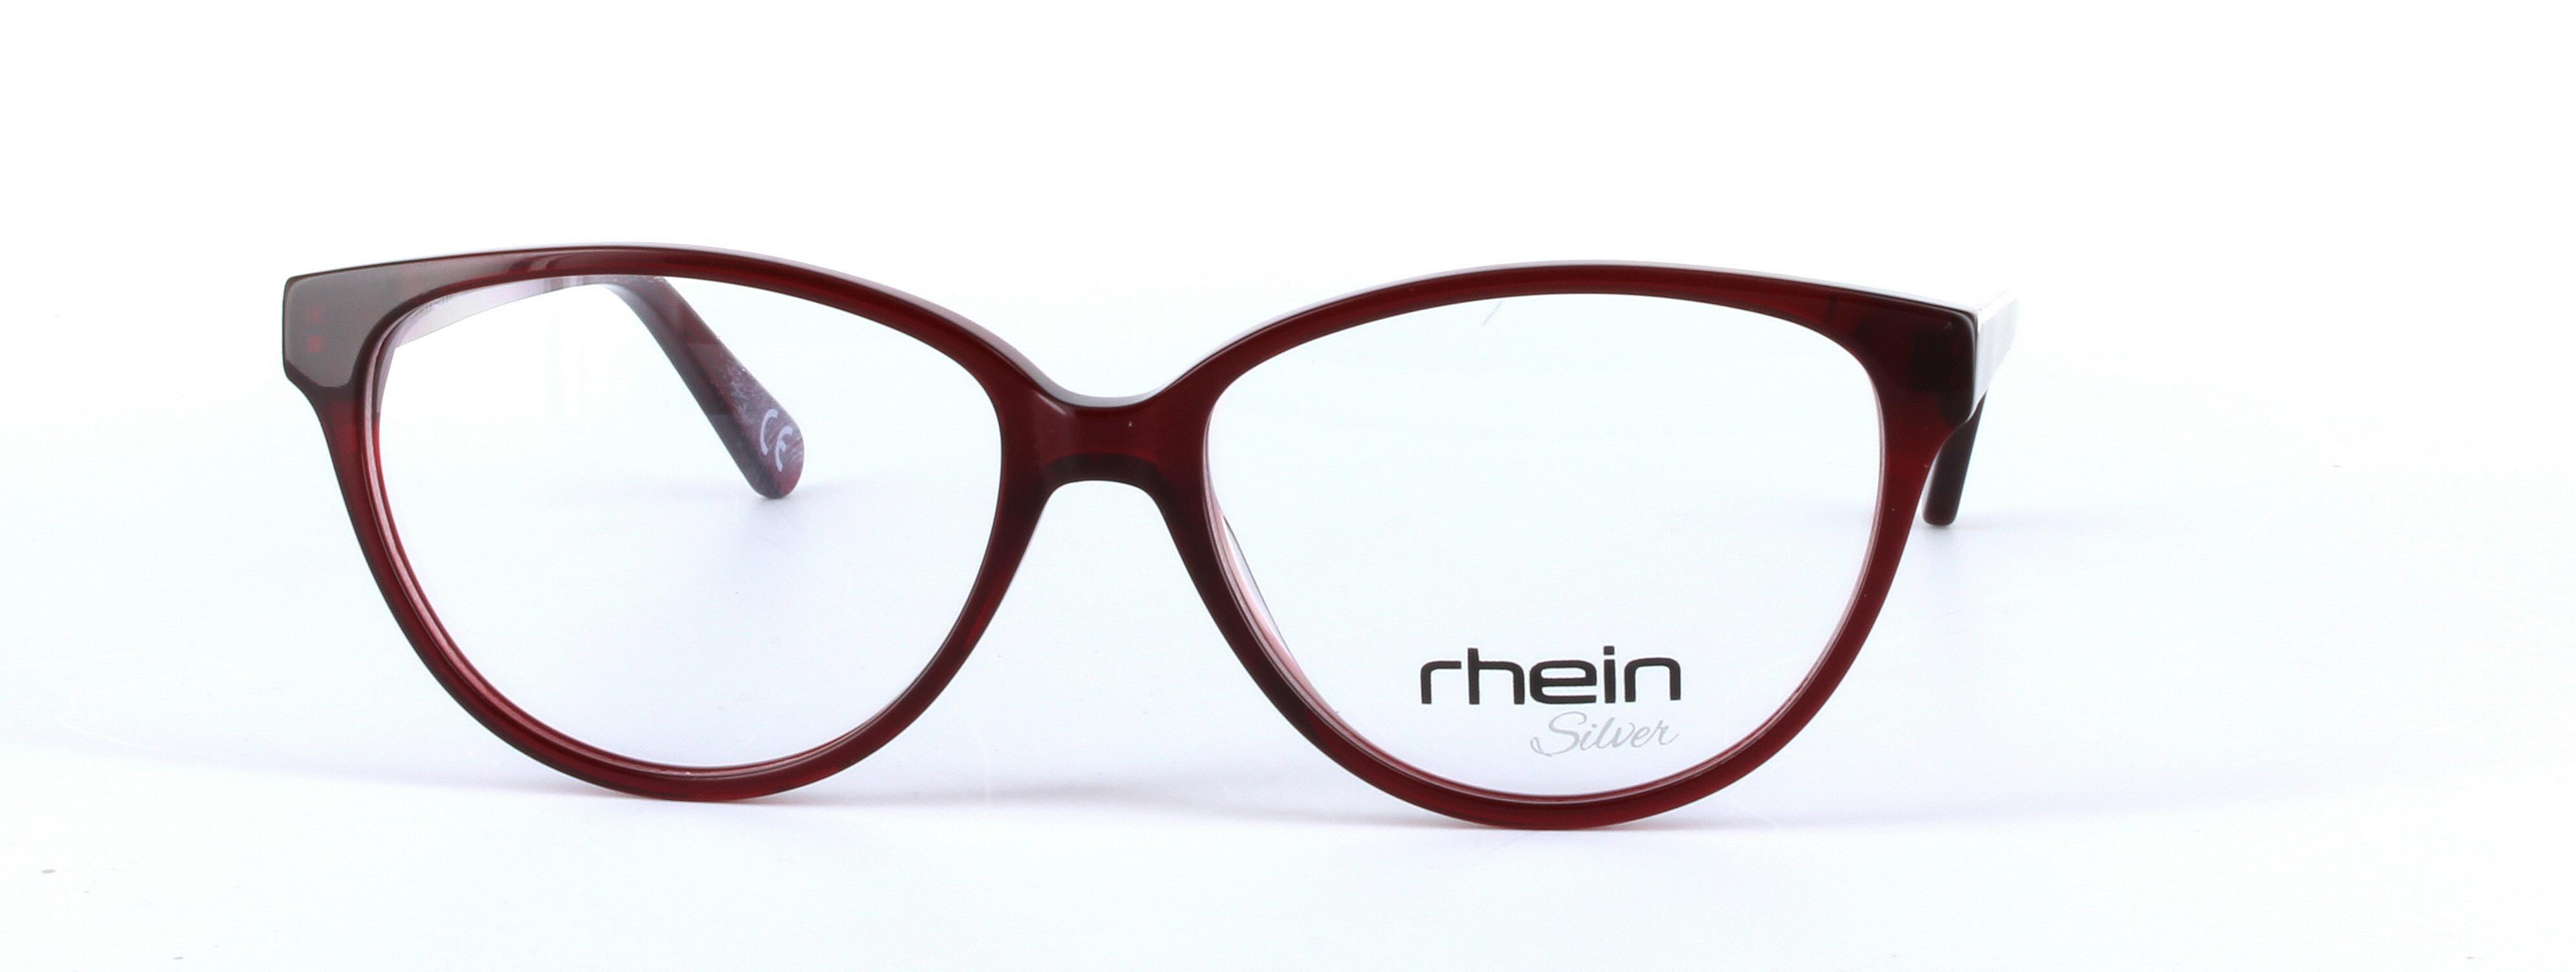 Alexia Black Full Rim Oval Round Plastic Glasses - Image View 5